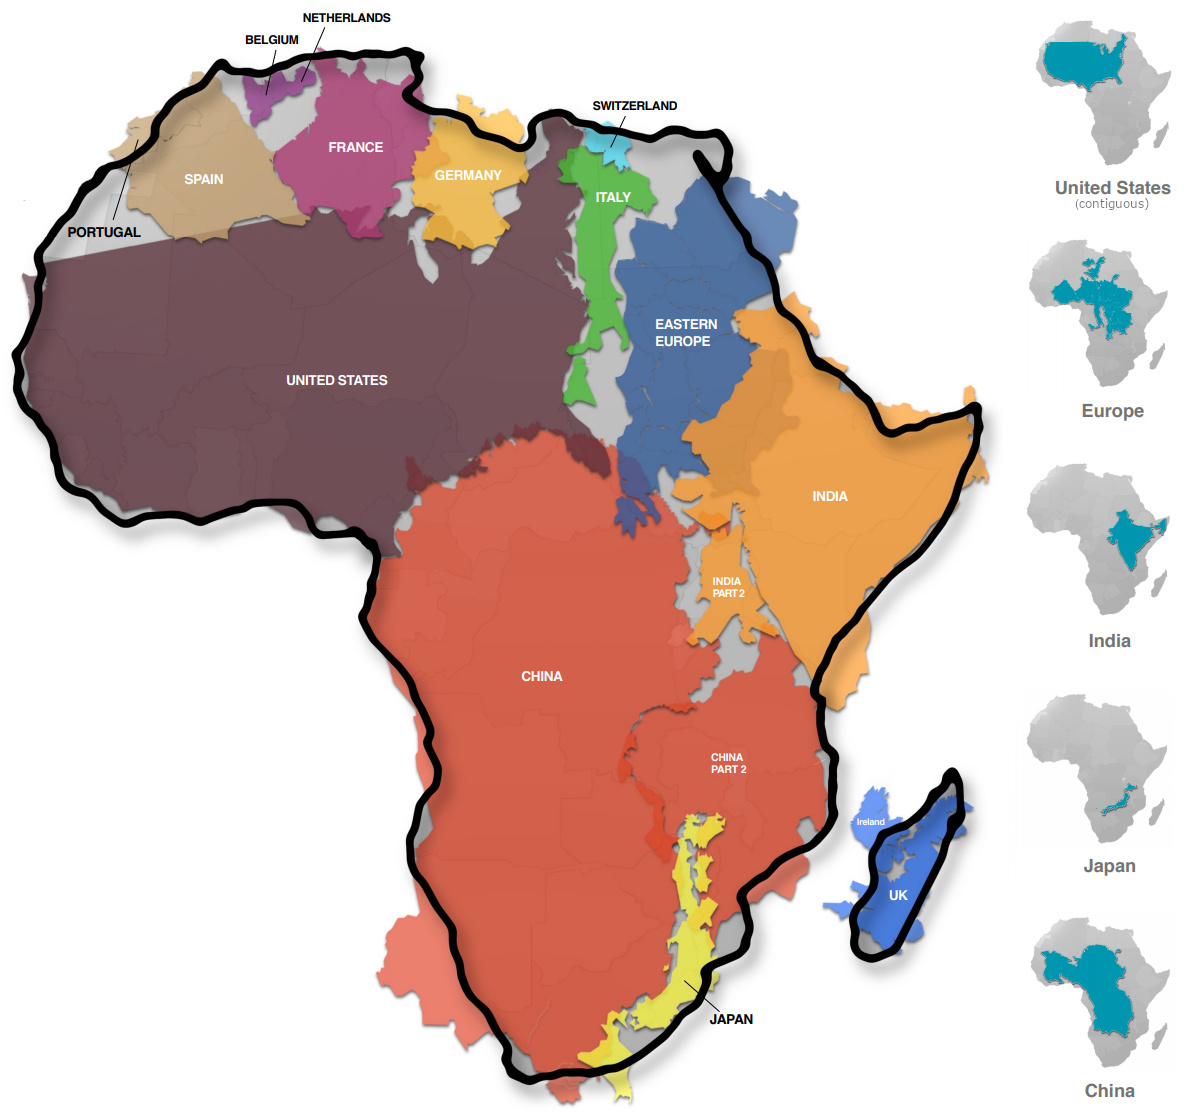 true-size-of-africa.jpg